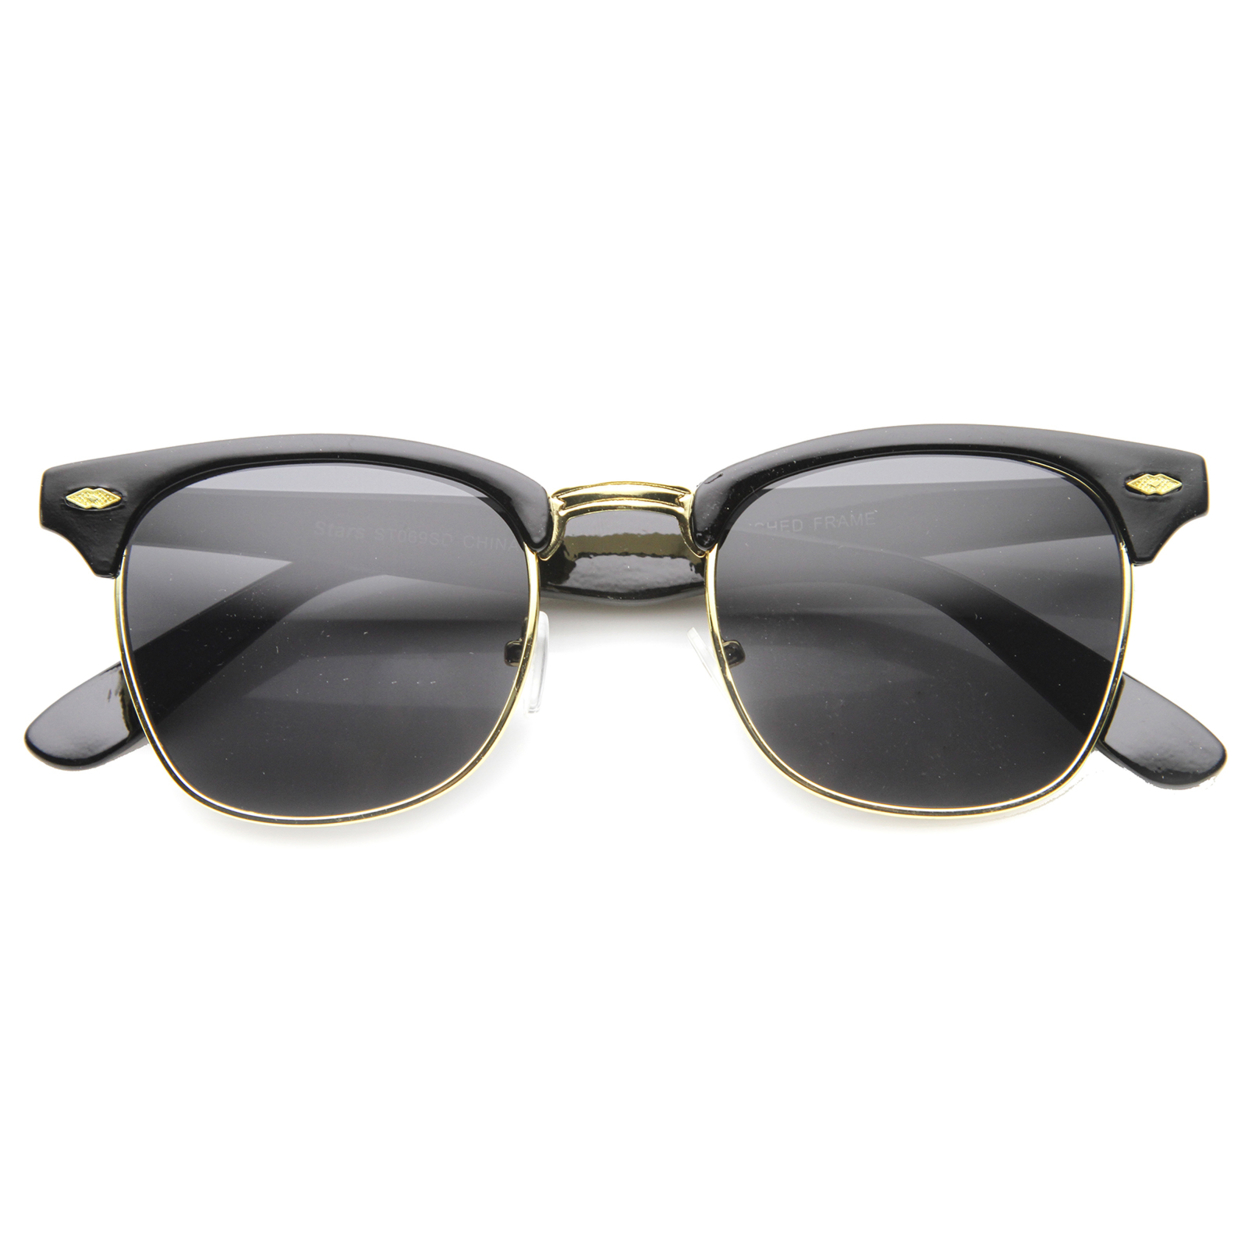 Unisex Horn Rimmed Sunglasses With UV400 Protected Composite Lens 9847 - Tortoise-Gold / Smoke